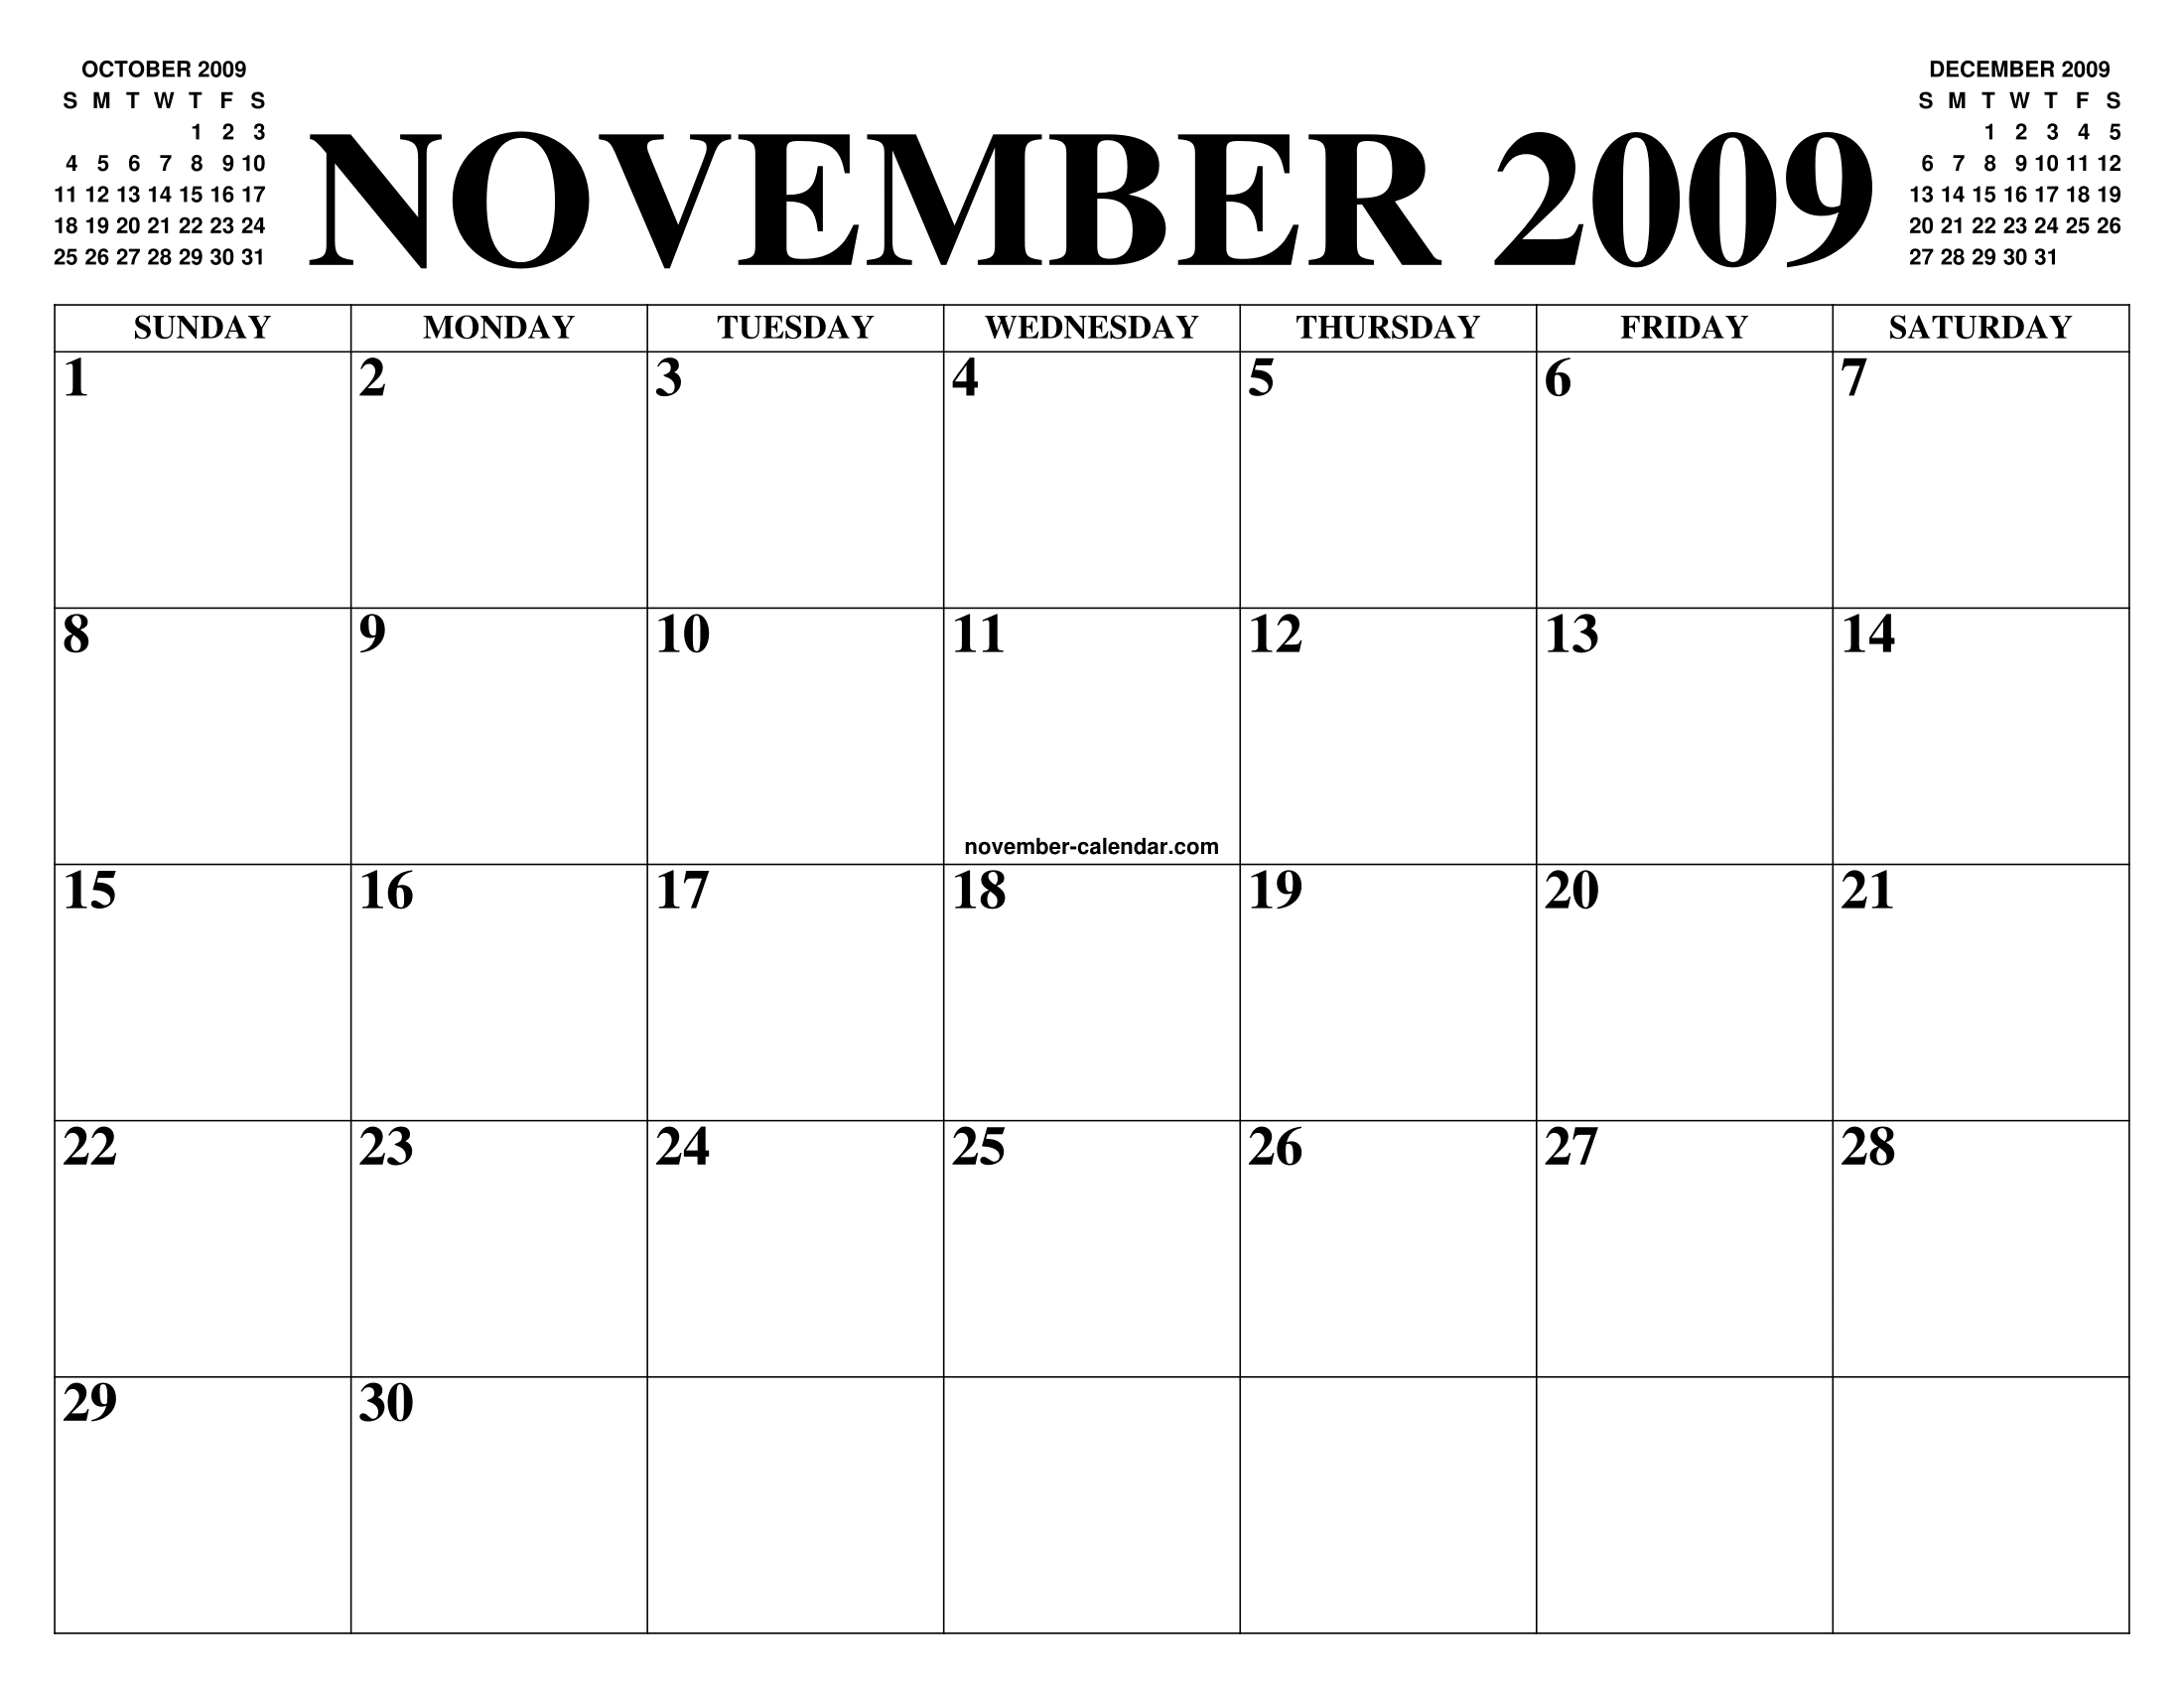 NOVEMBER 2009 CALENDAR OF THE MONTH: FREE PRINTABLE NOVEMBER